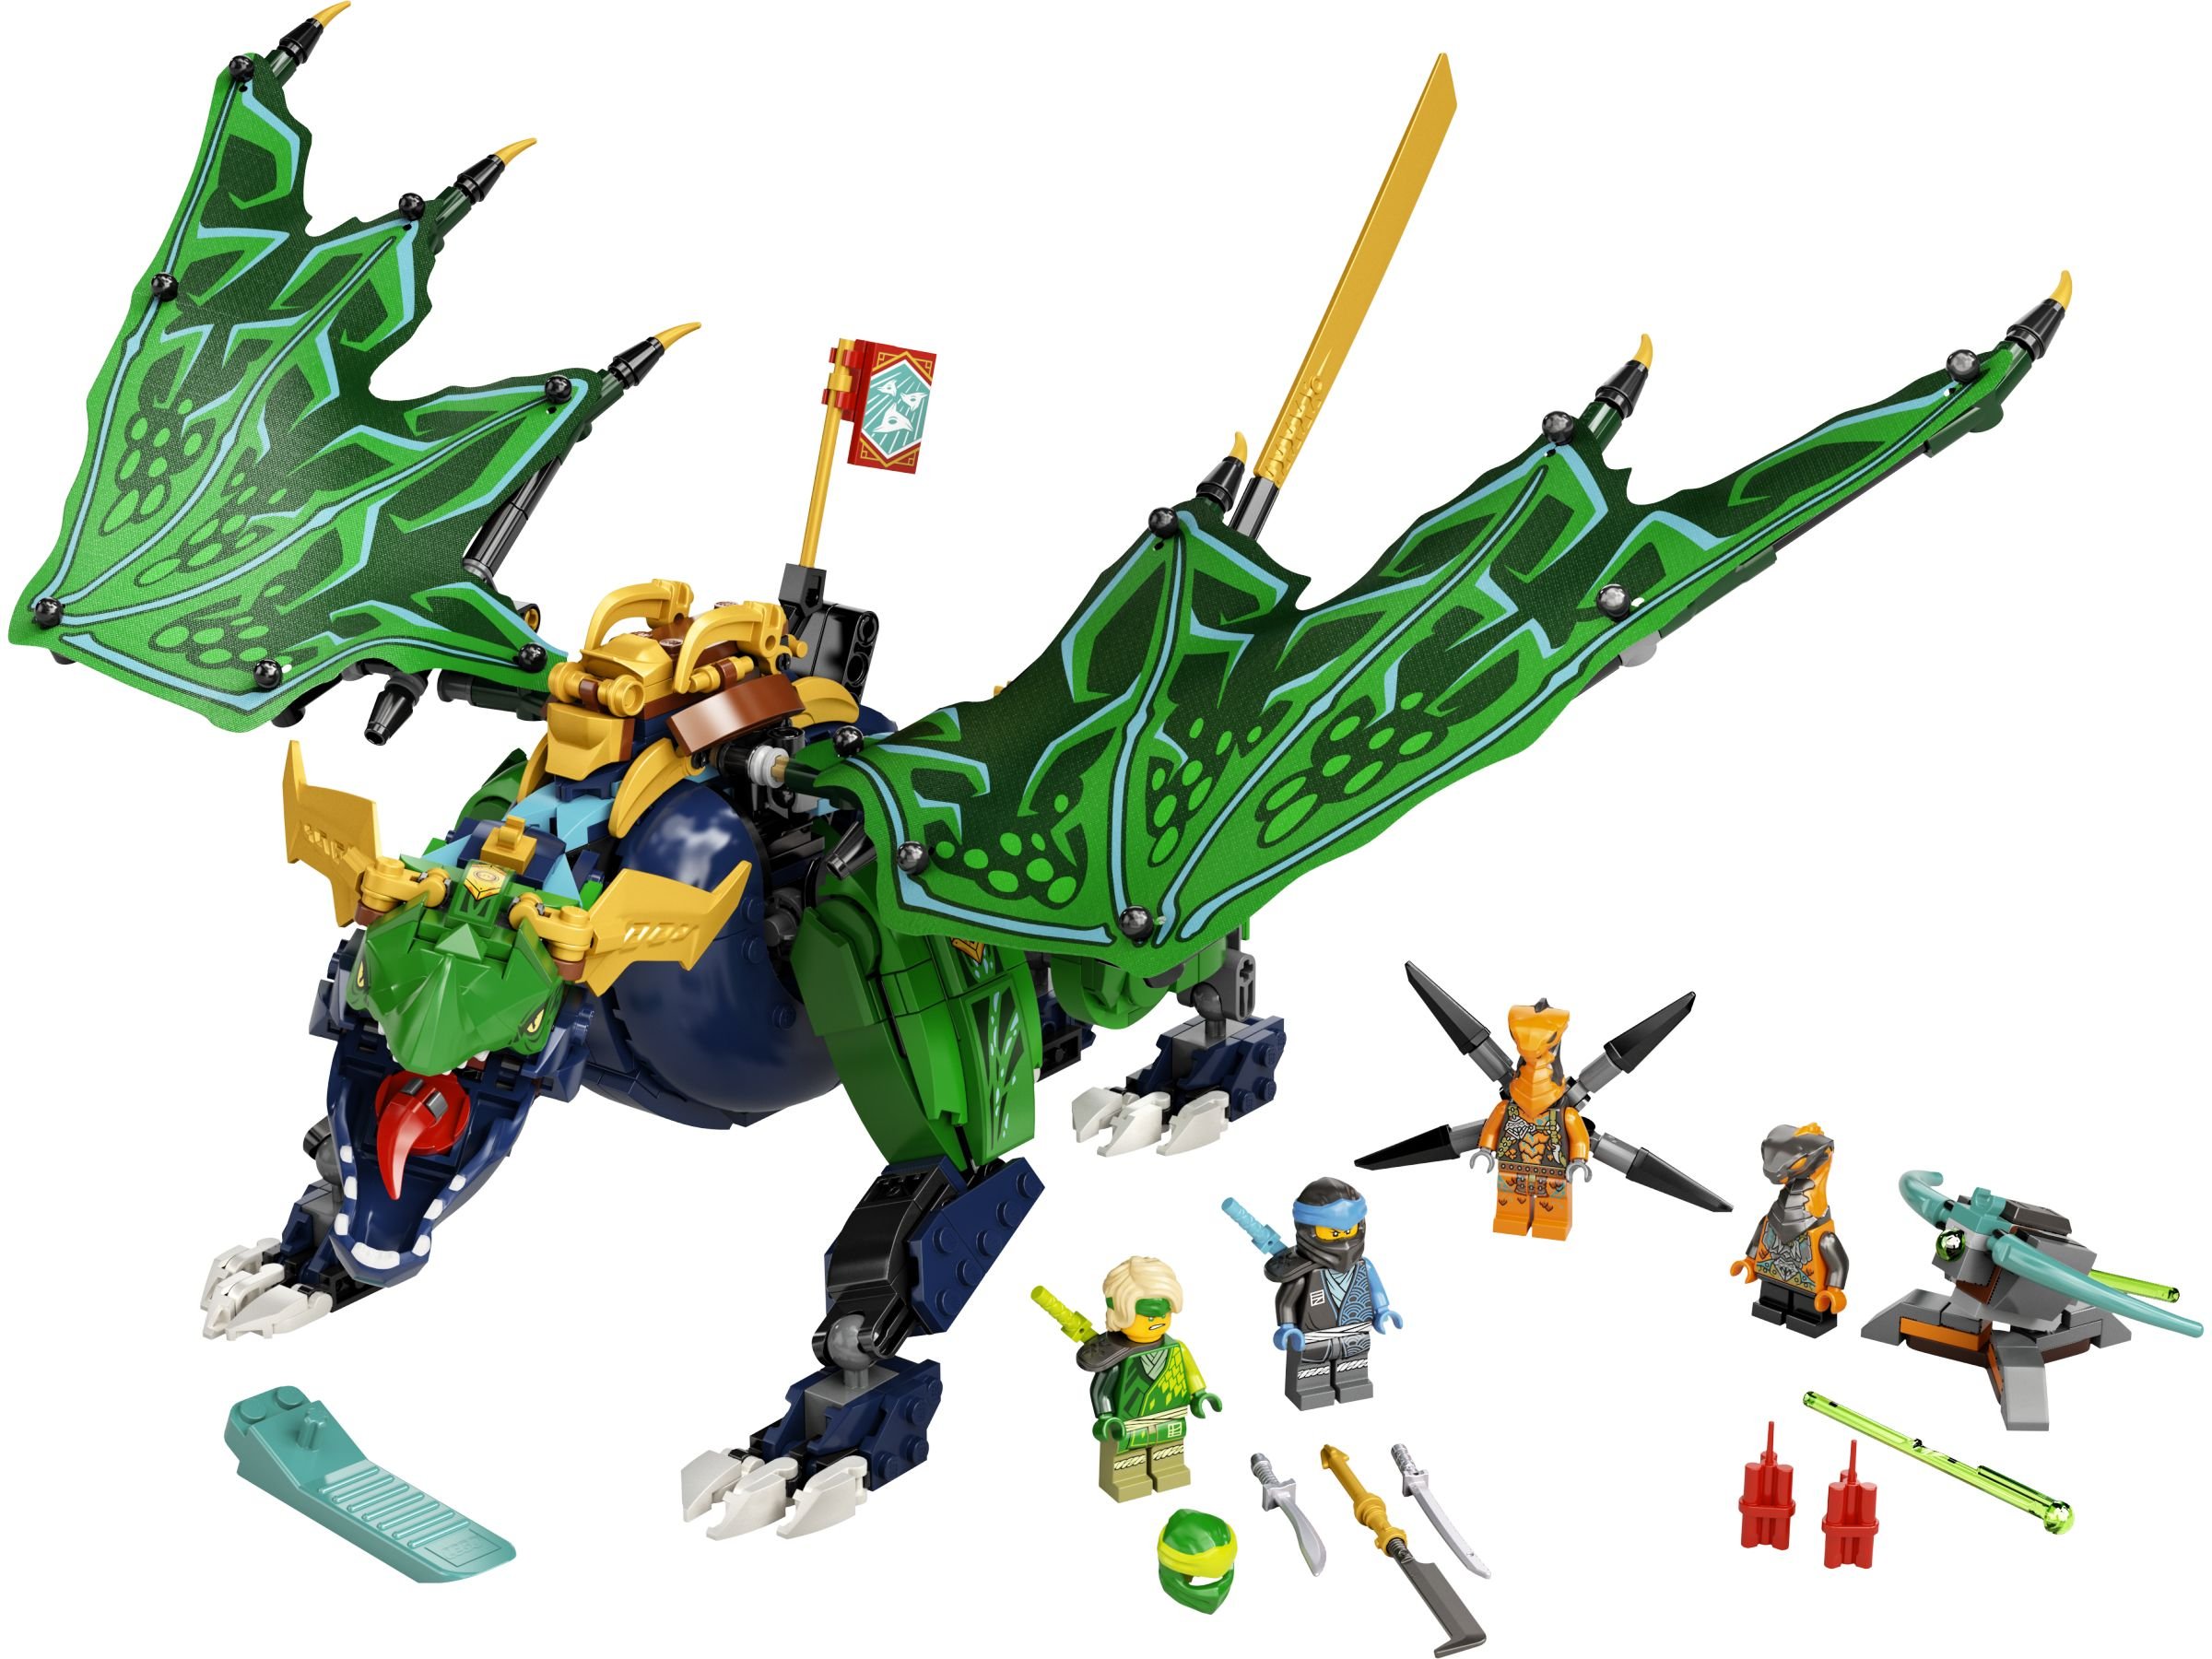 LEGO Ninjago 71766 Lloyds legendärer Drache